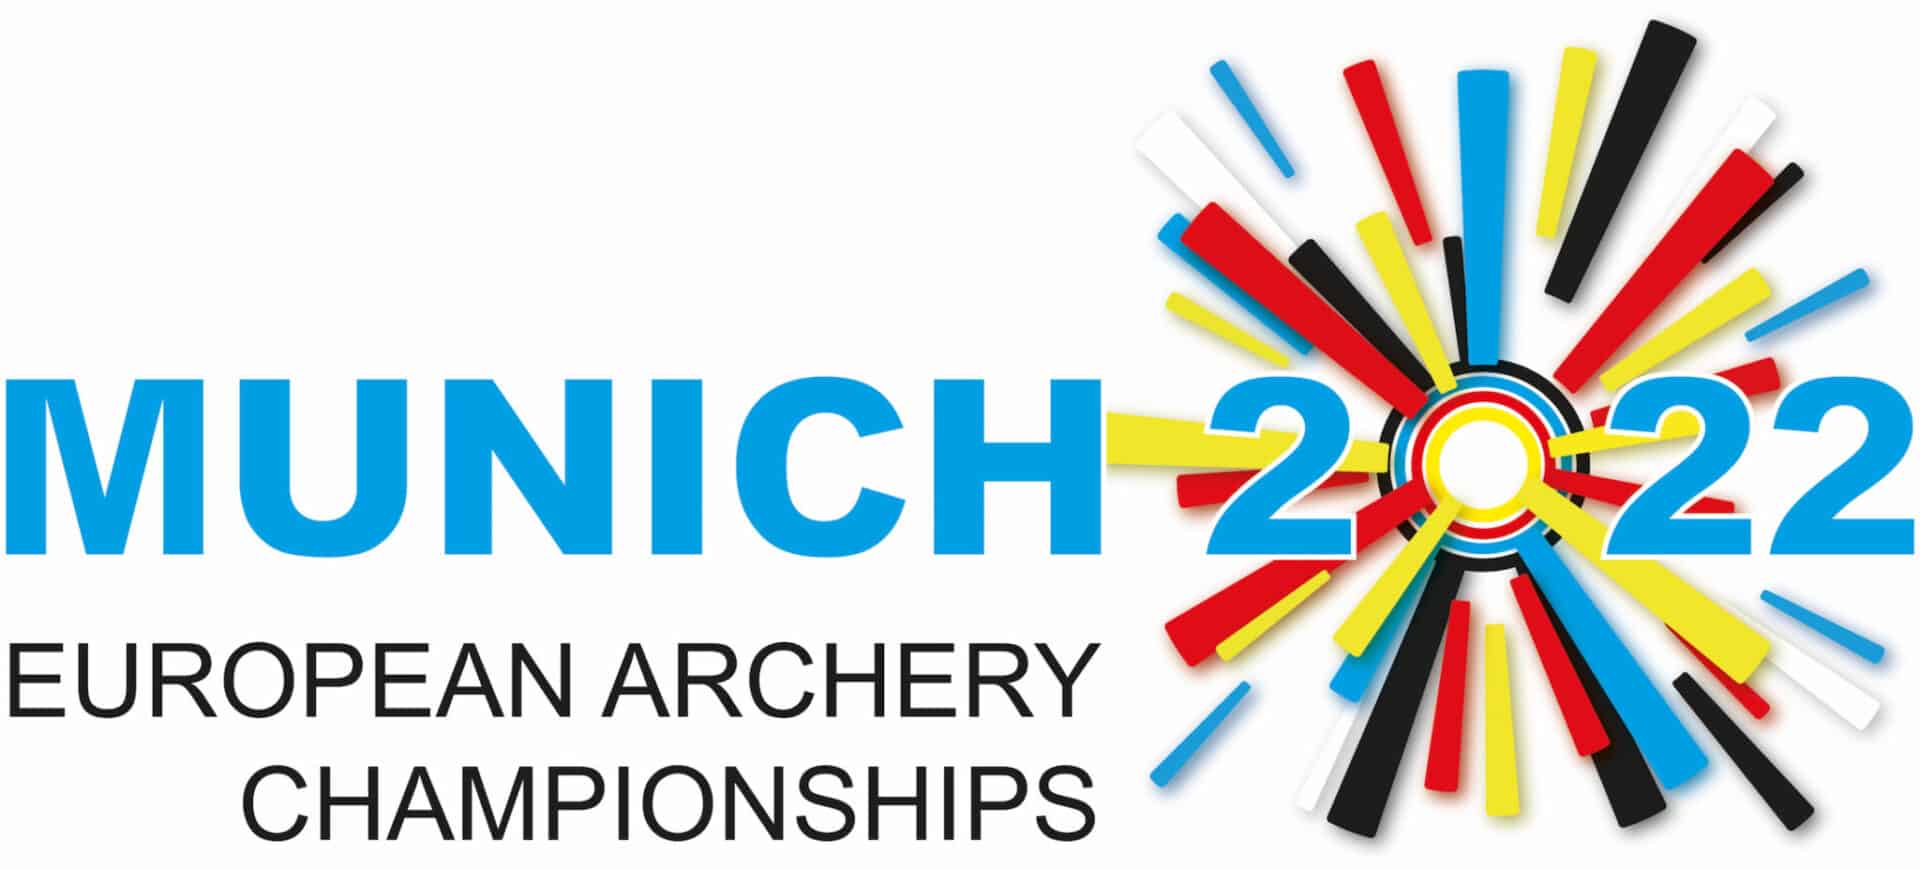 Munich 2022 European Archery Championships team named